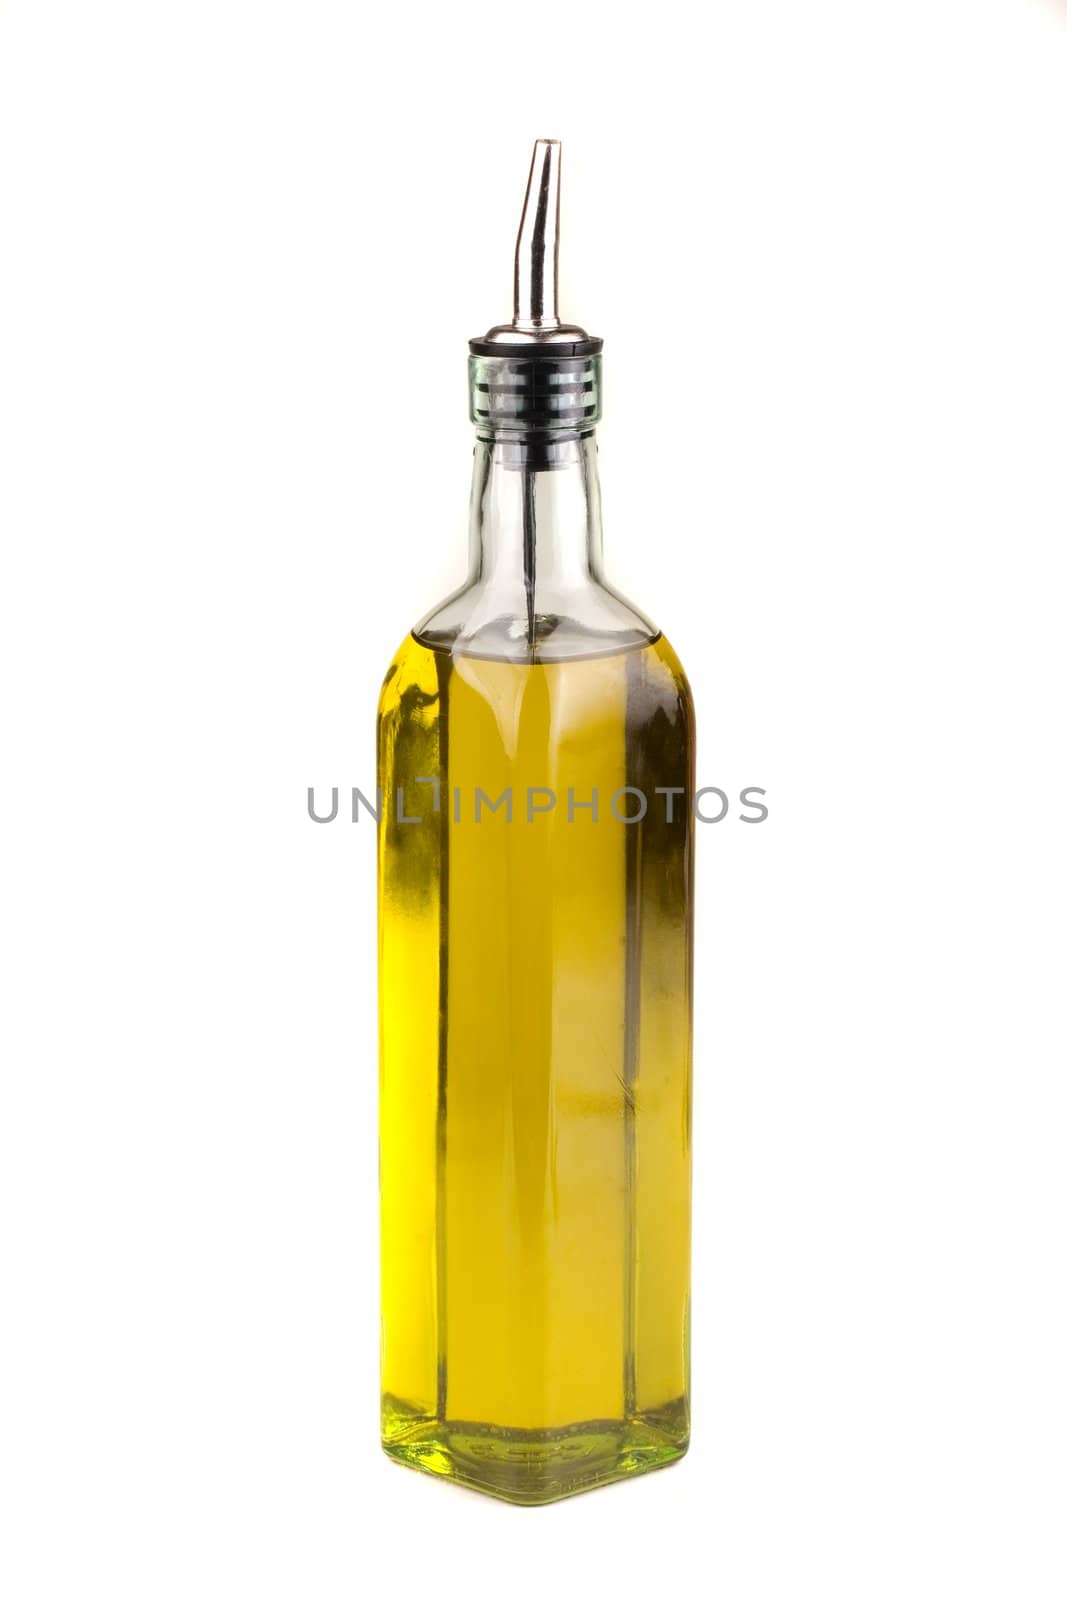 Olive oil in glass dispenser